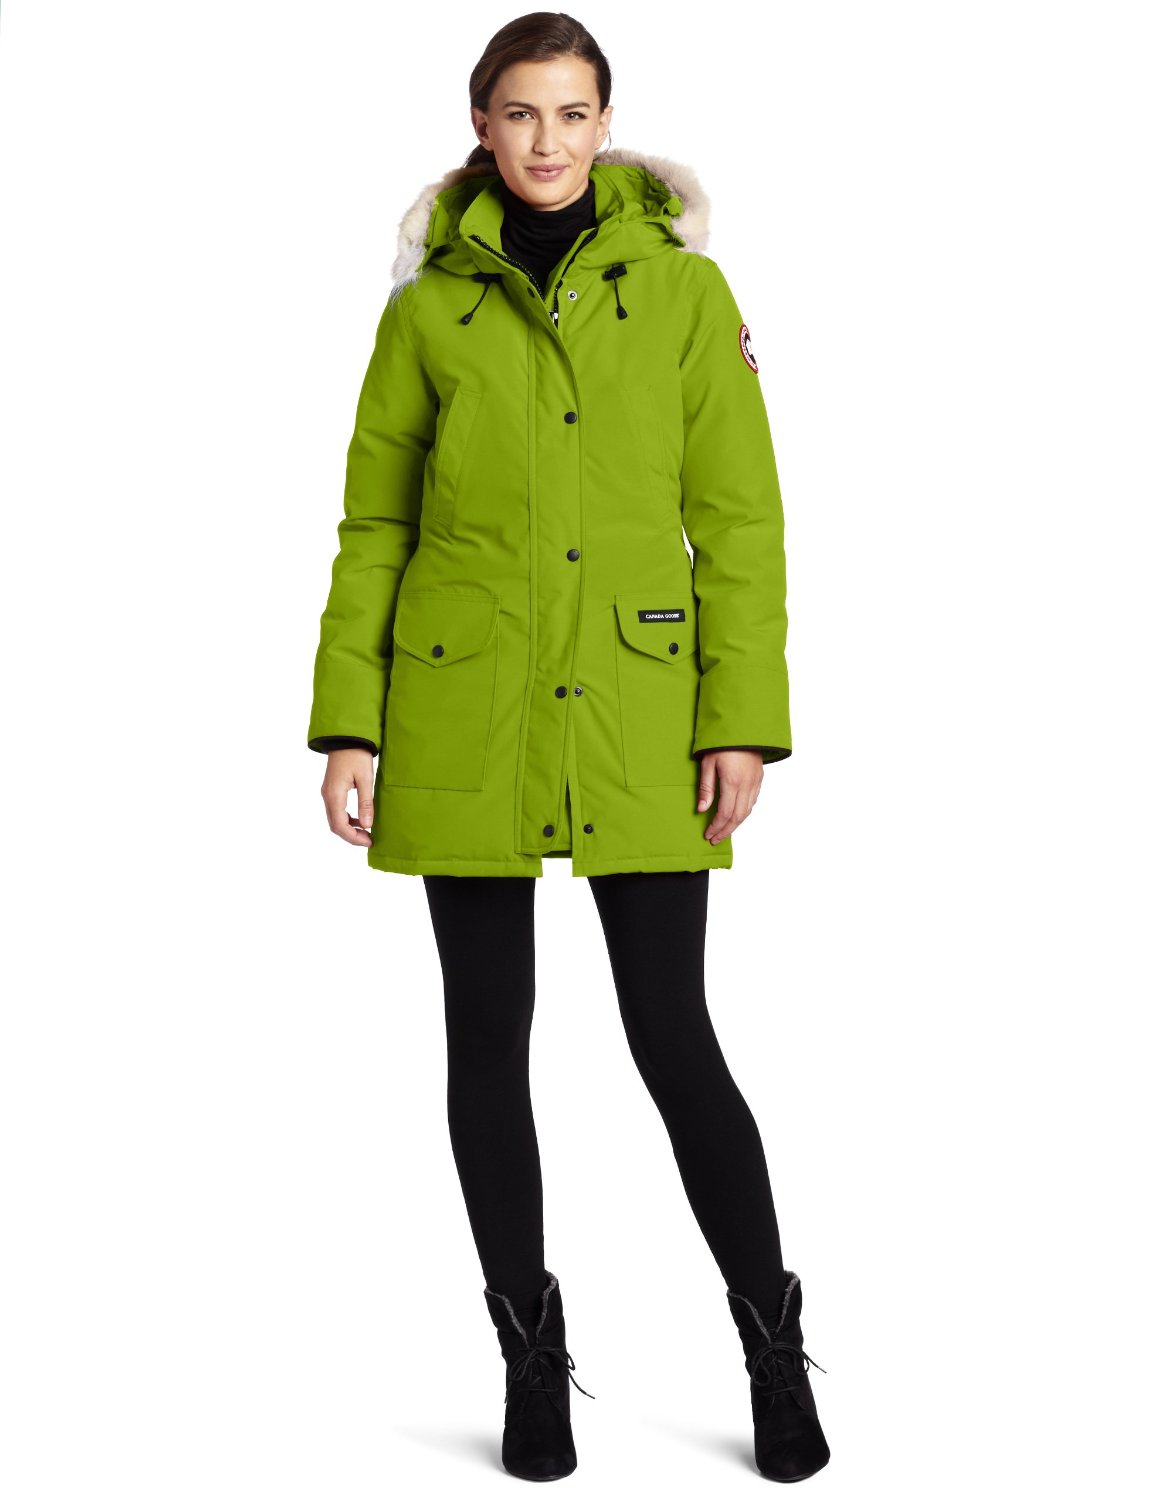 Canada Goose down sale store - Canada Goose Trillium Parka best winter Parka? - My Fashion Wants